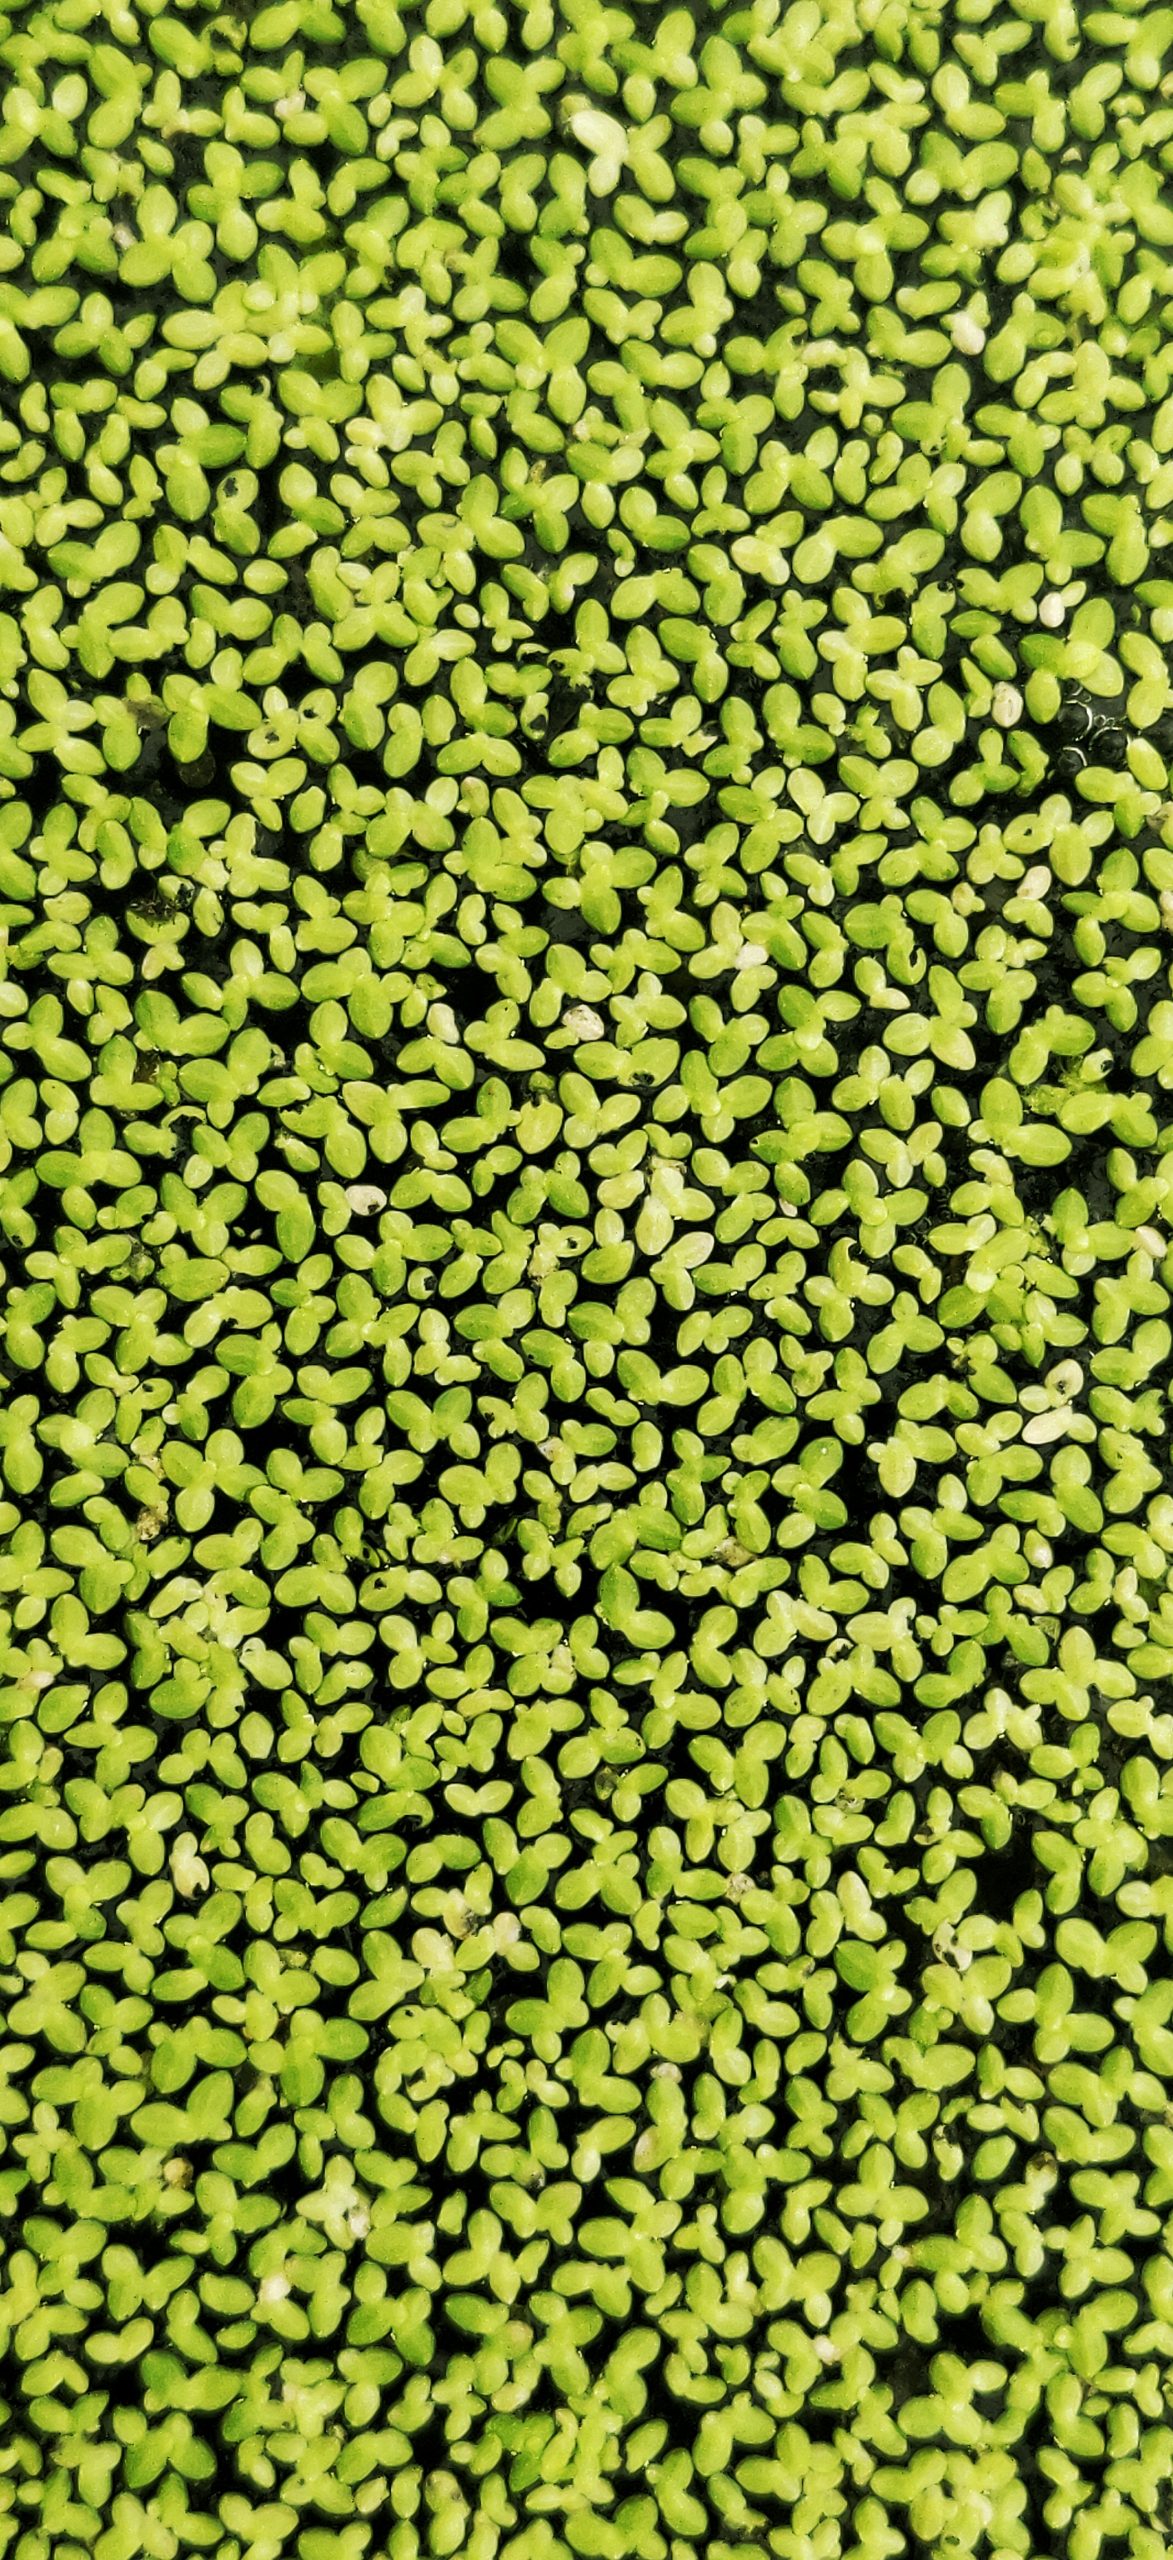 Seeds arranged in a pattern